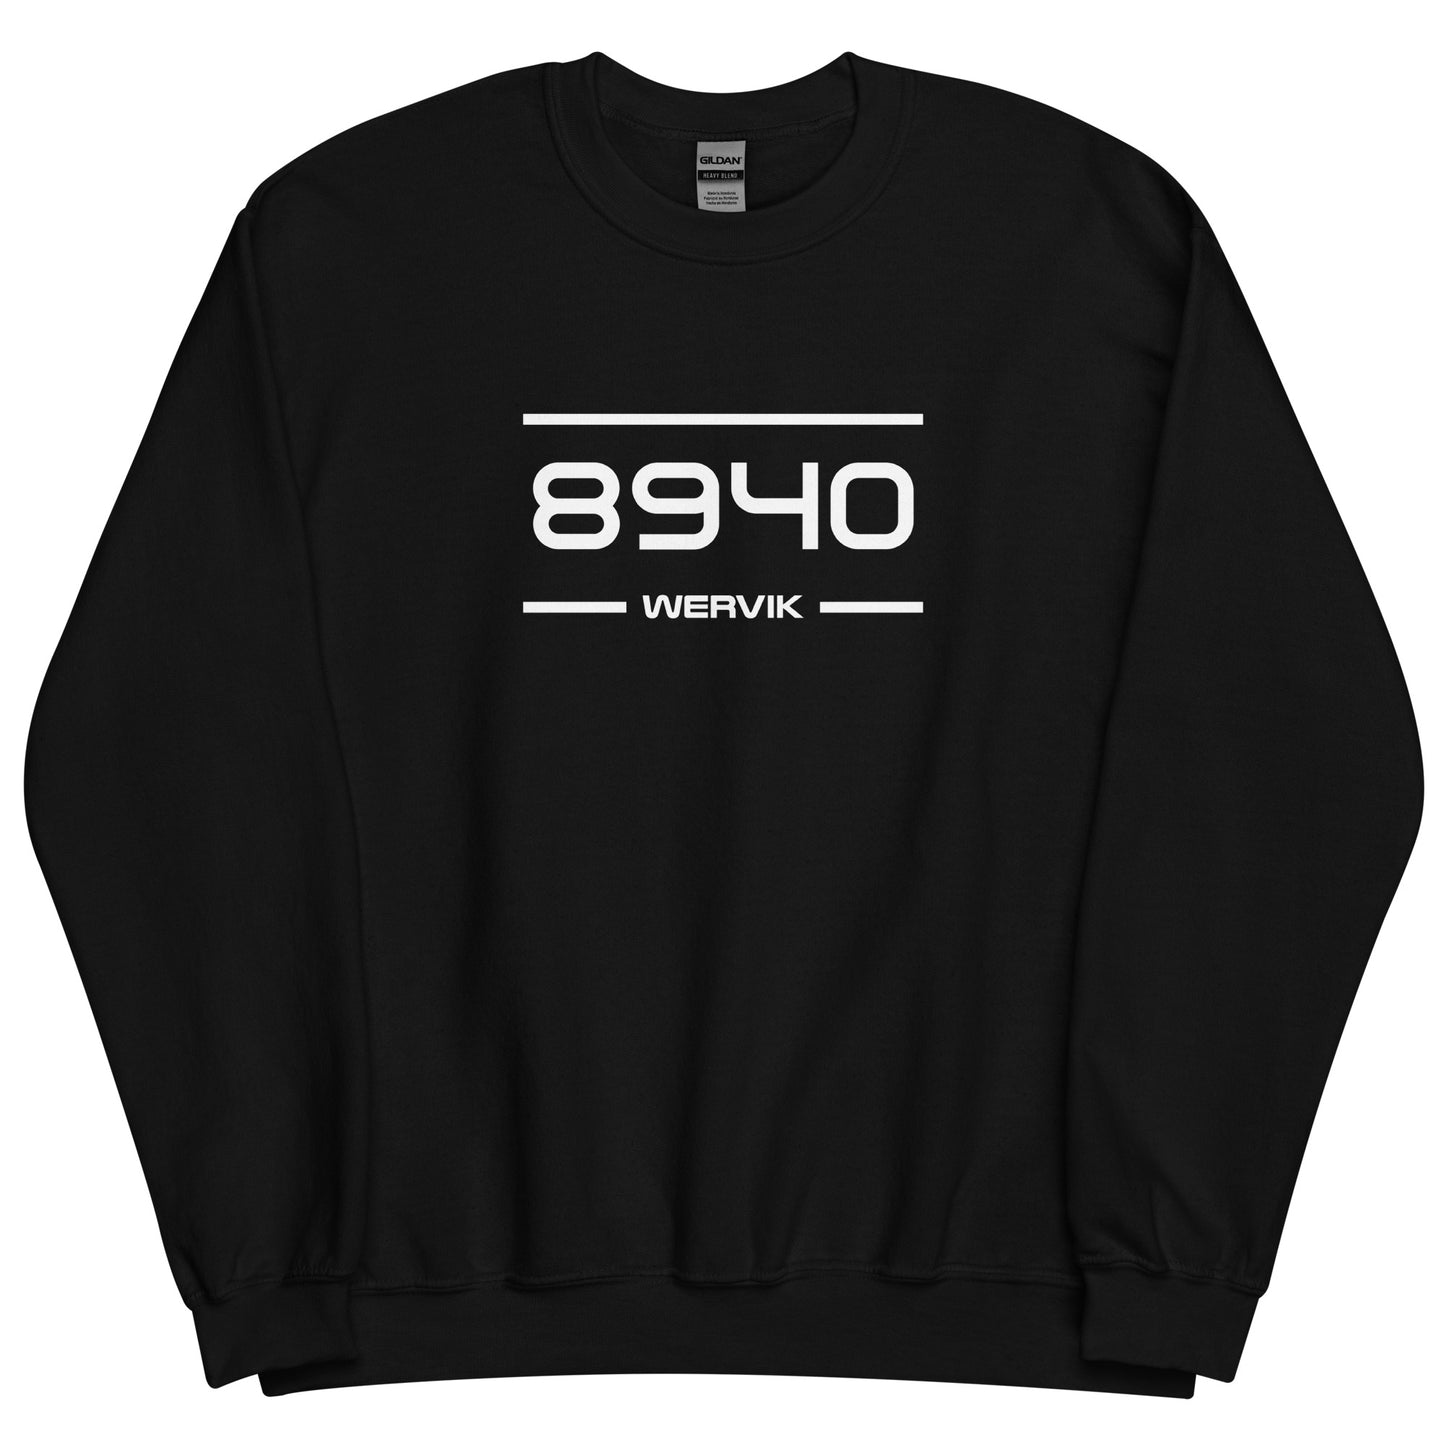 Sweater - 8940 - Wervik (M/V)